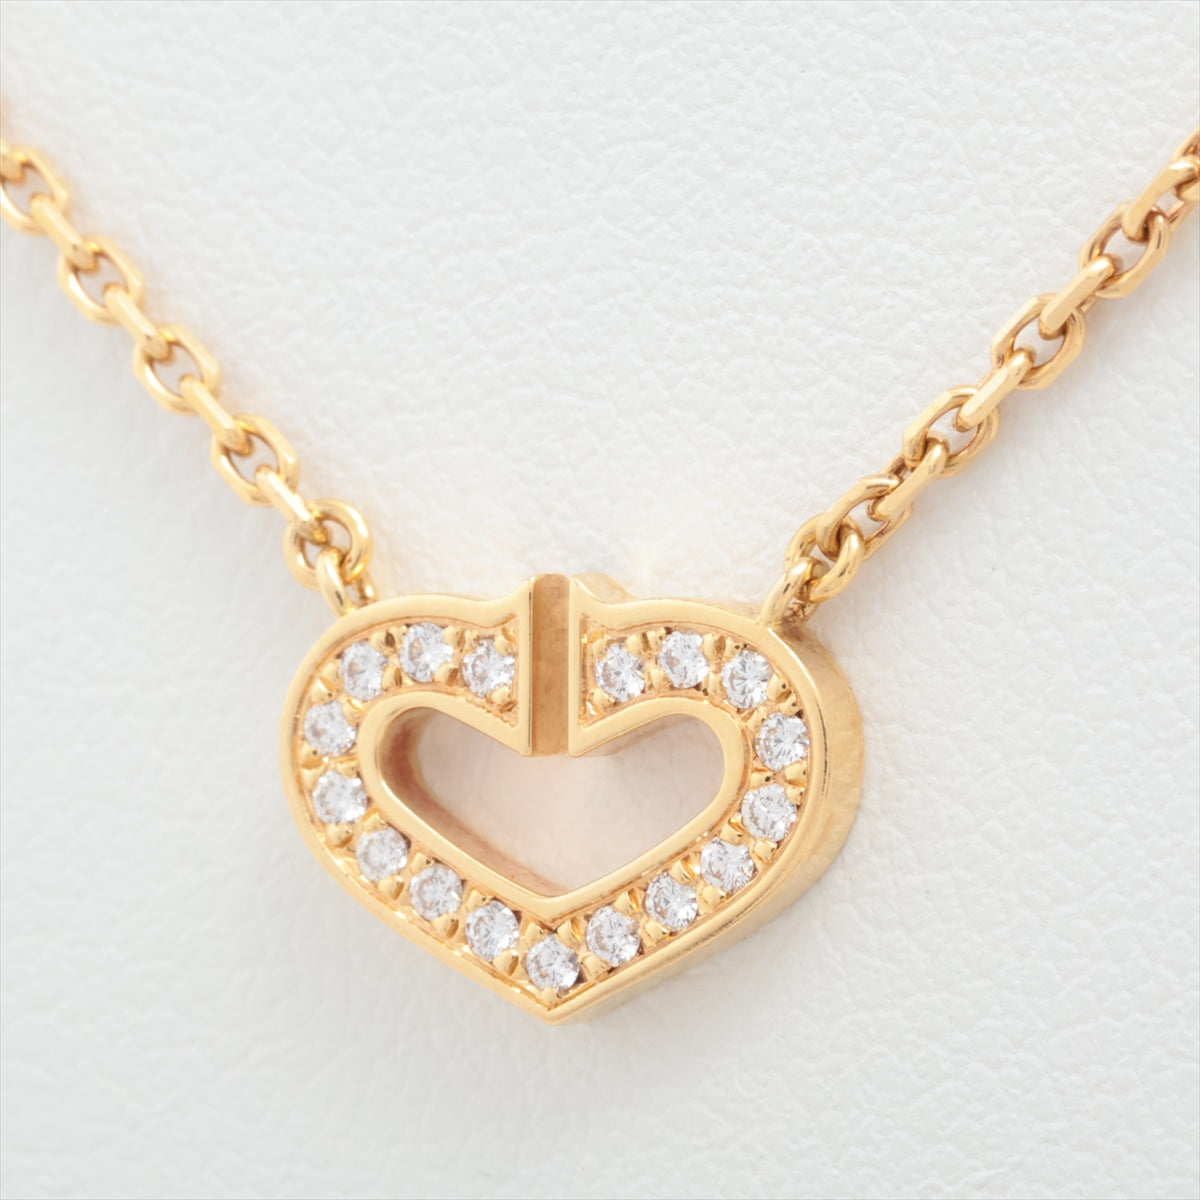 Cartier C Heart Diamond Necklace 750 (YG) 5.7g